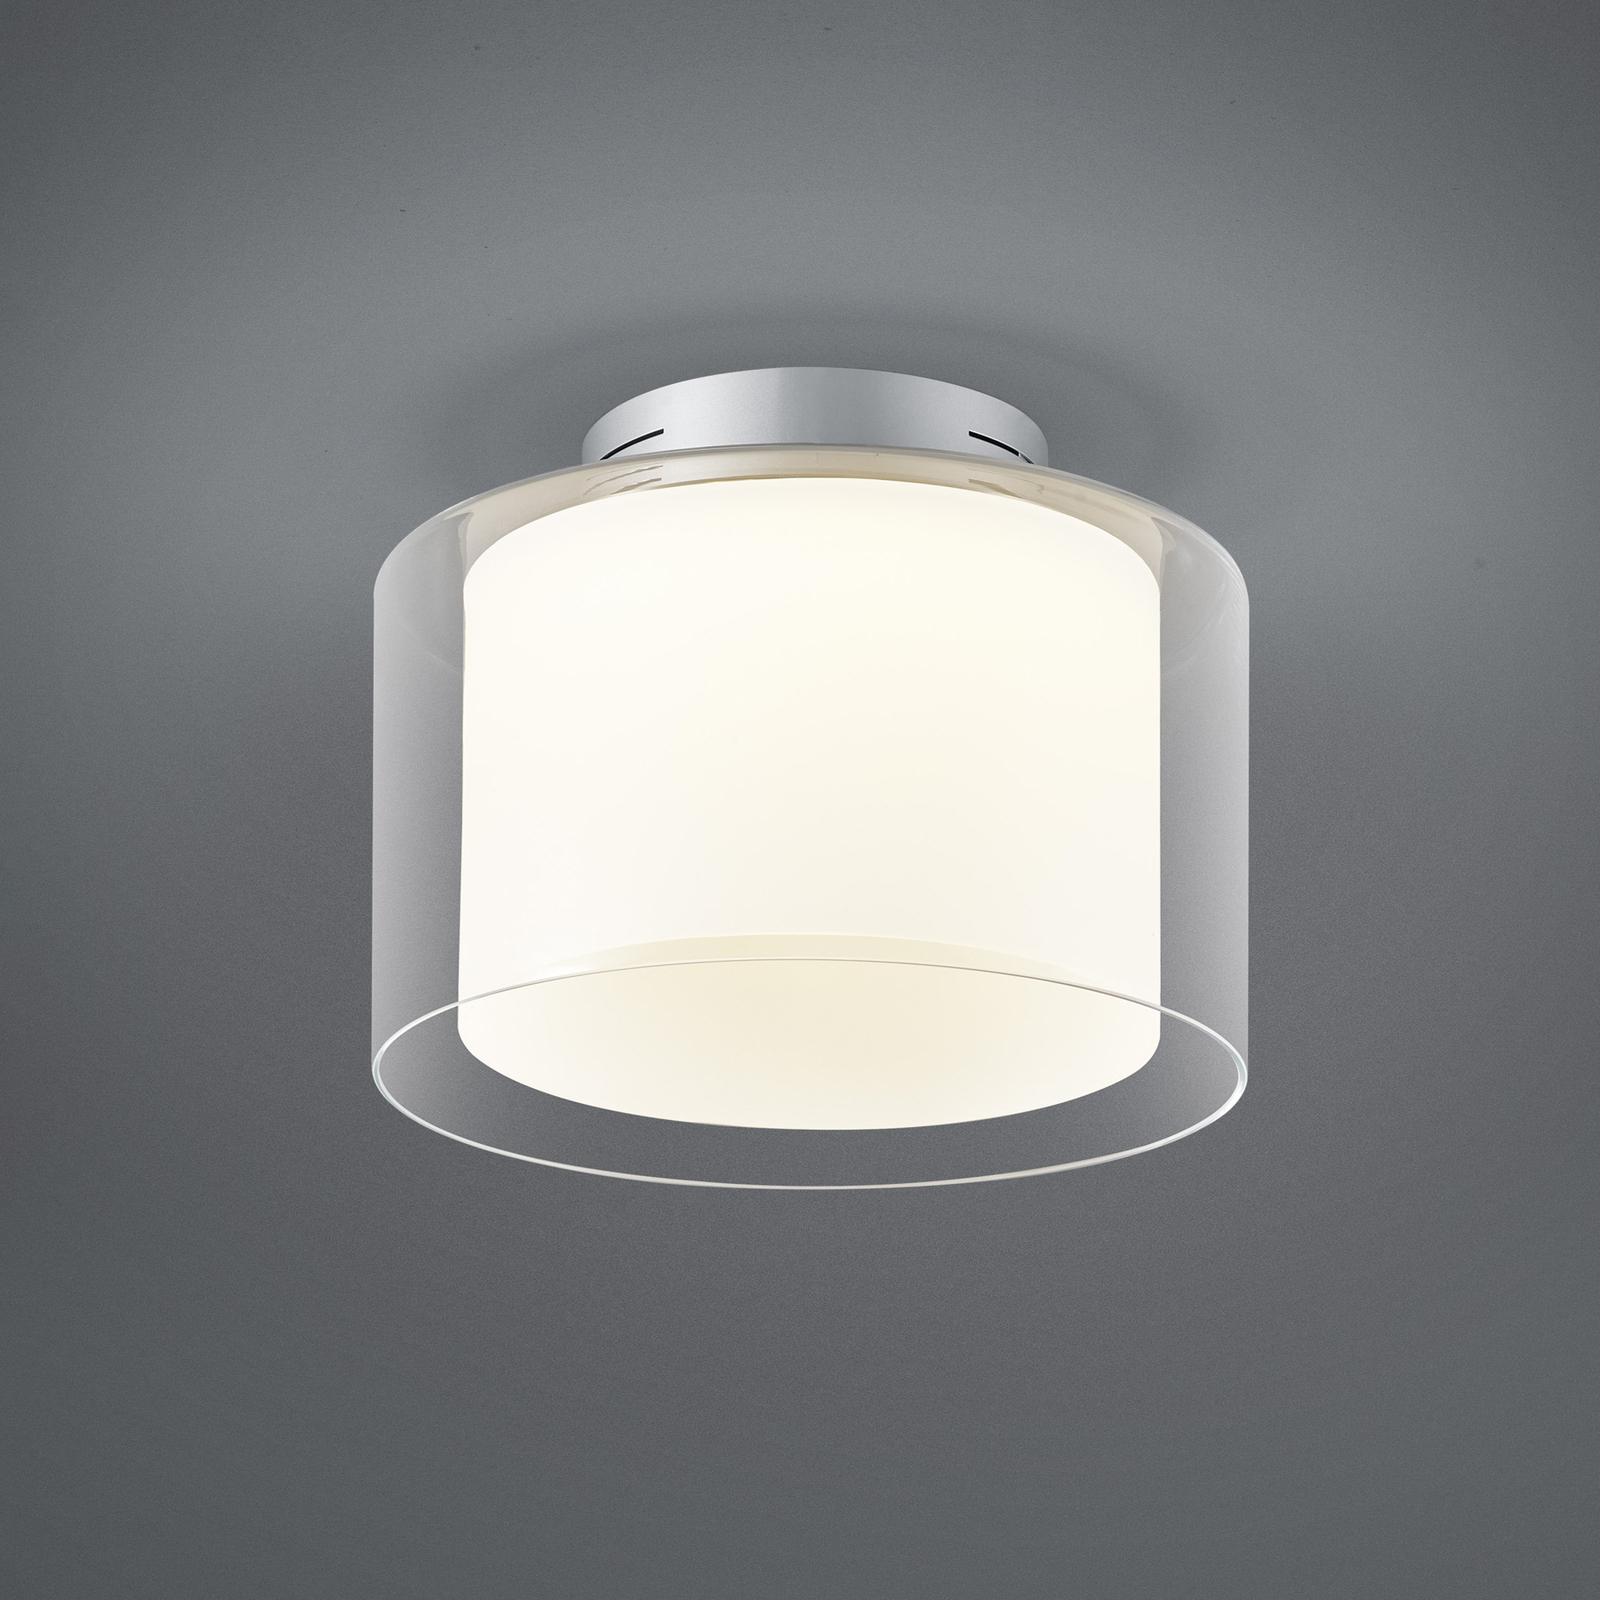 BANKAMP Grand Clear lampa sufitowa LED, Ø 32 cm